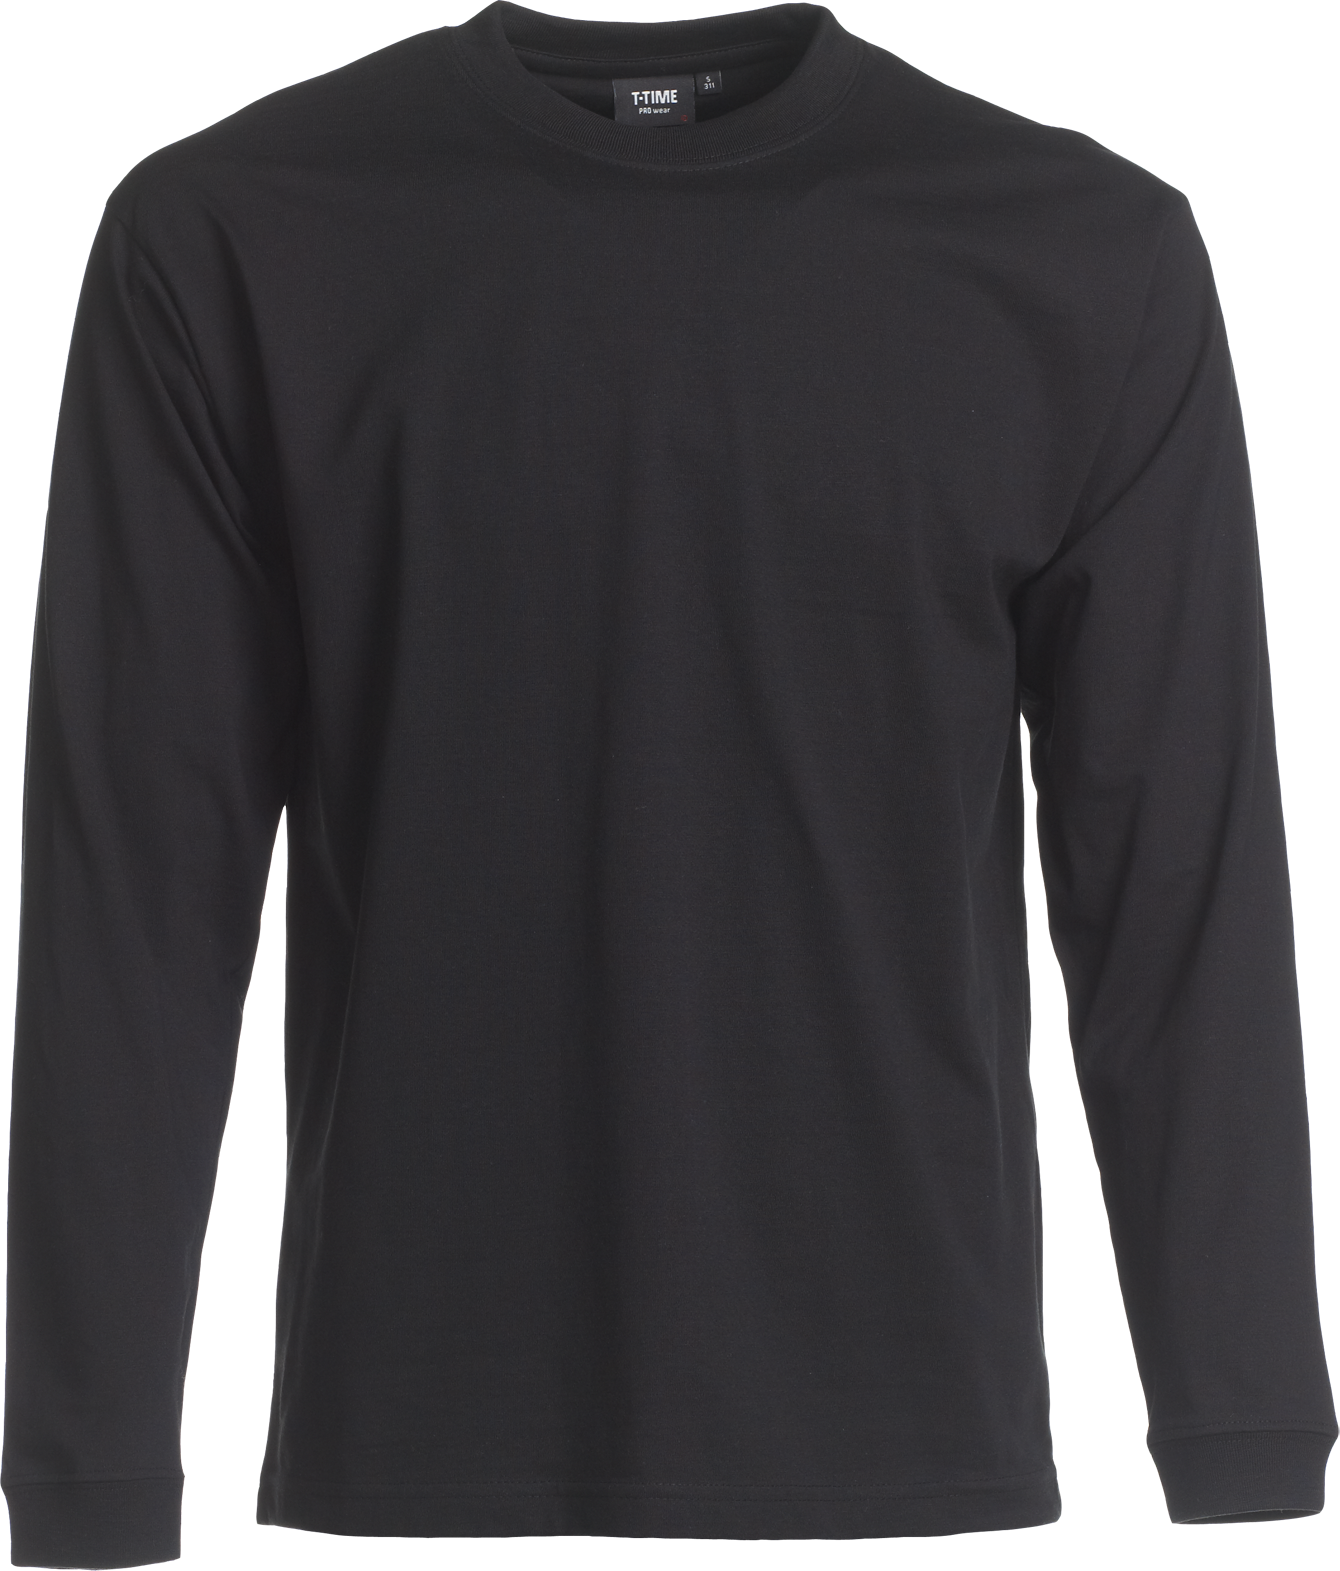 Schwarz Herren T-Shirt, Prowear (8150221)